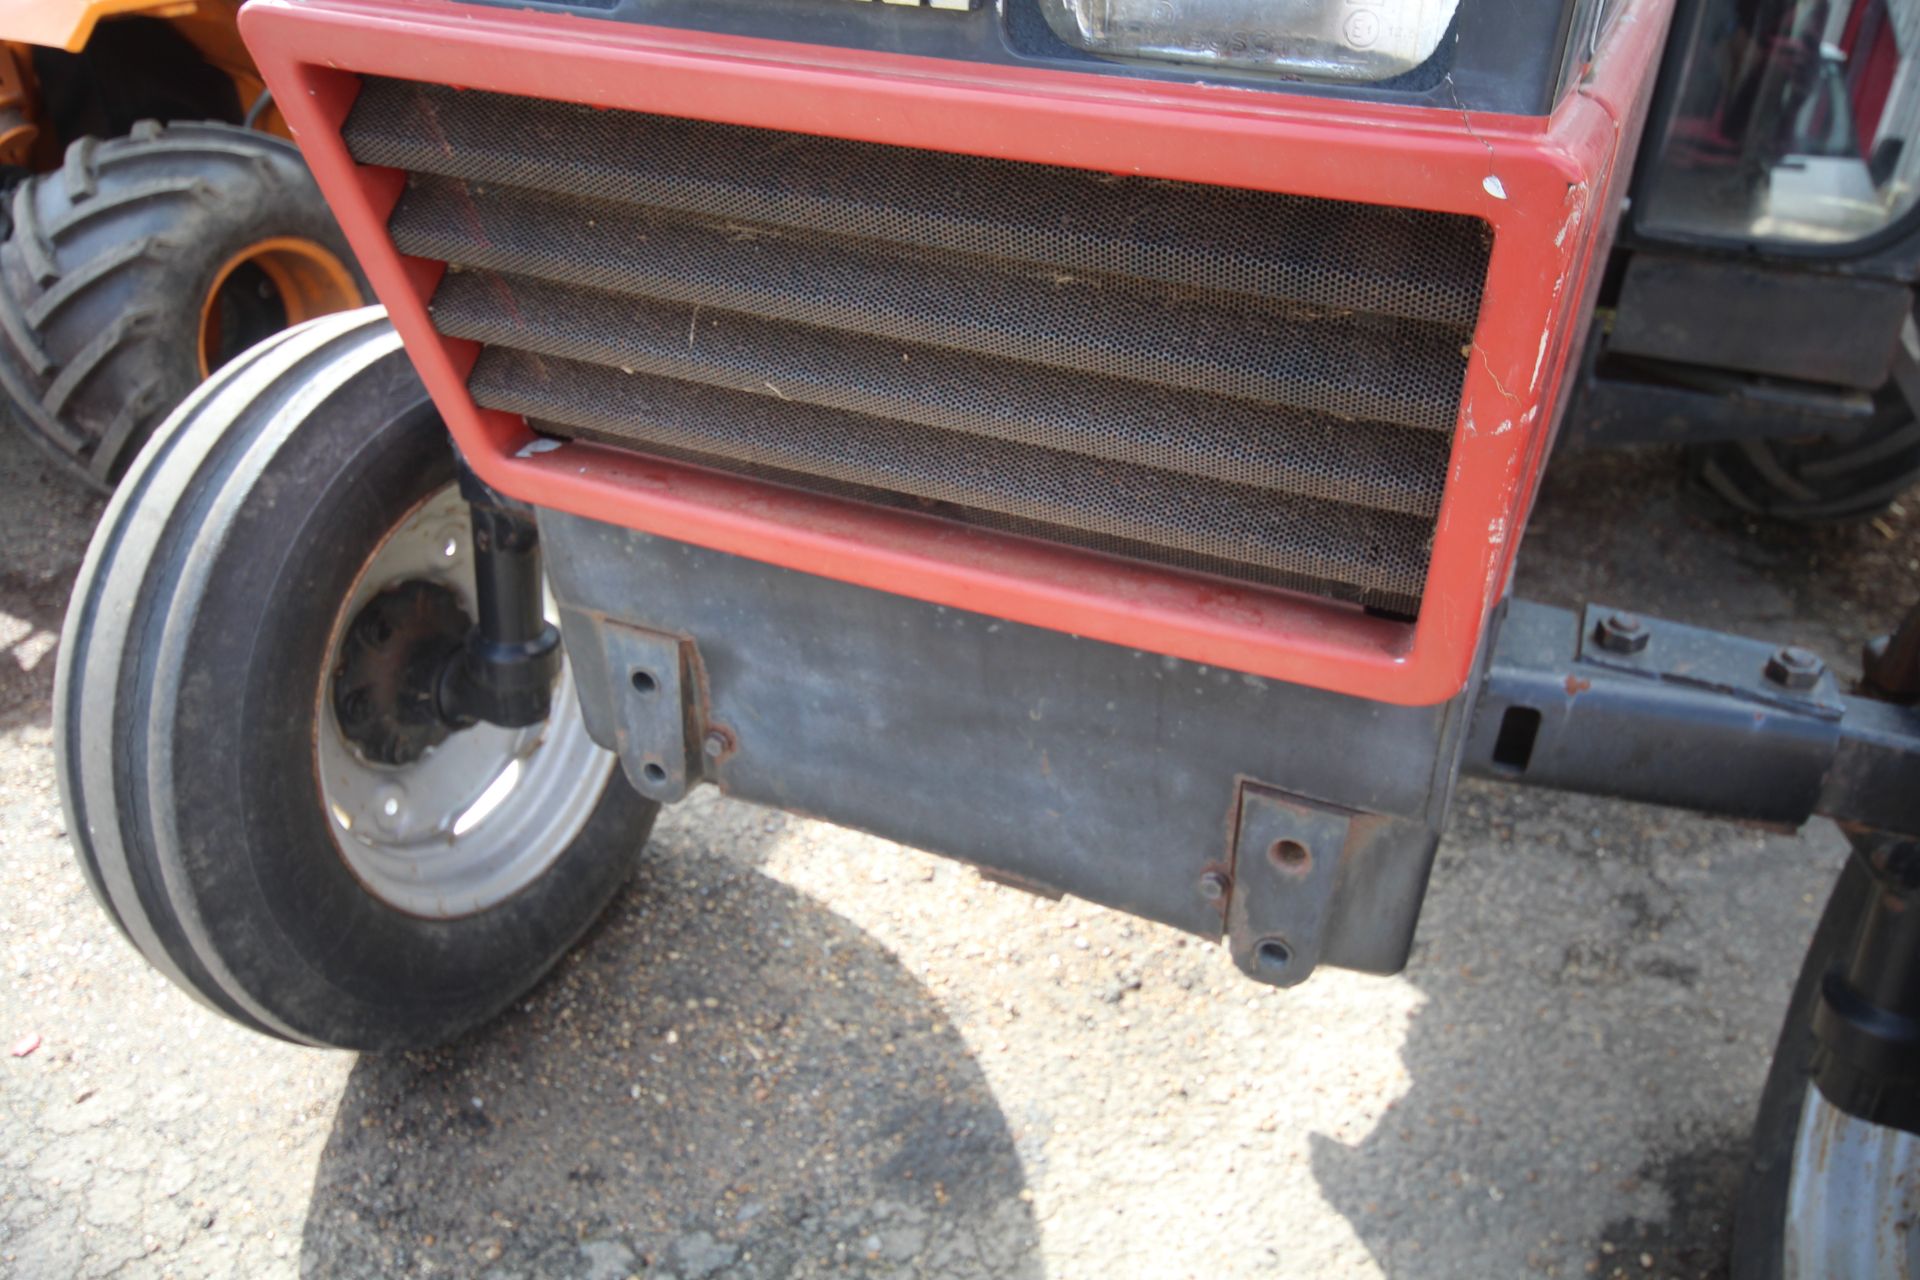 Case International 485 2WD tractor. Registration D404 APV. Date of first registration 27/10/1986. - Image 6 of 57